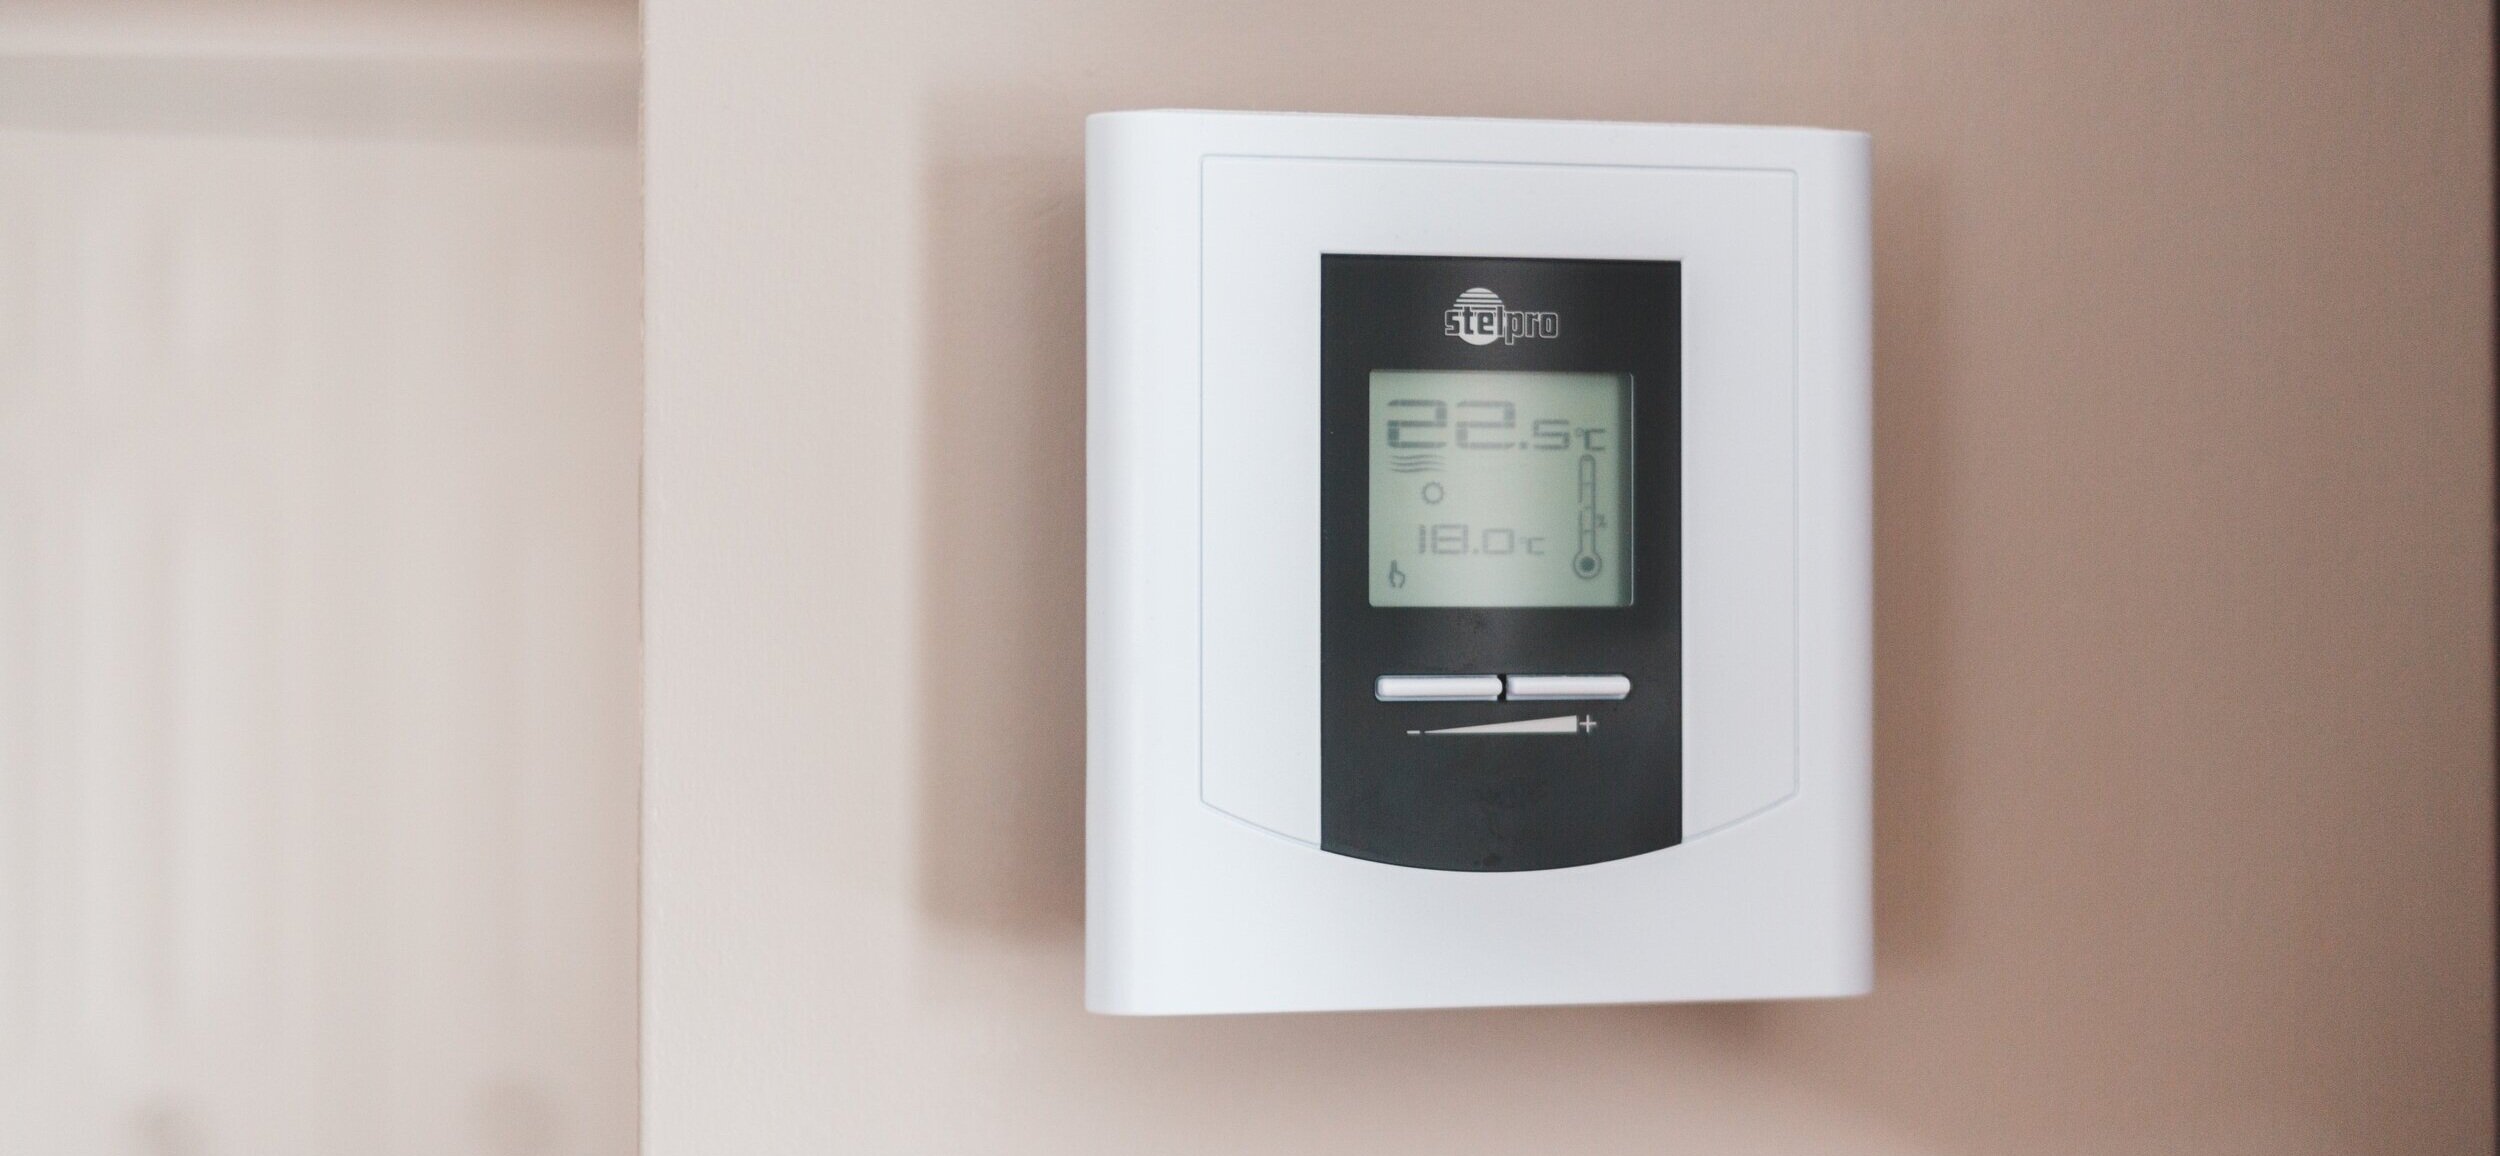 thermostat-electrical-bill-saving-money-Minneapolis-electrician-HVAC